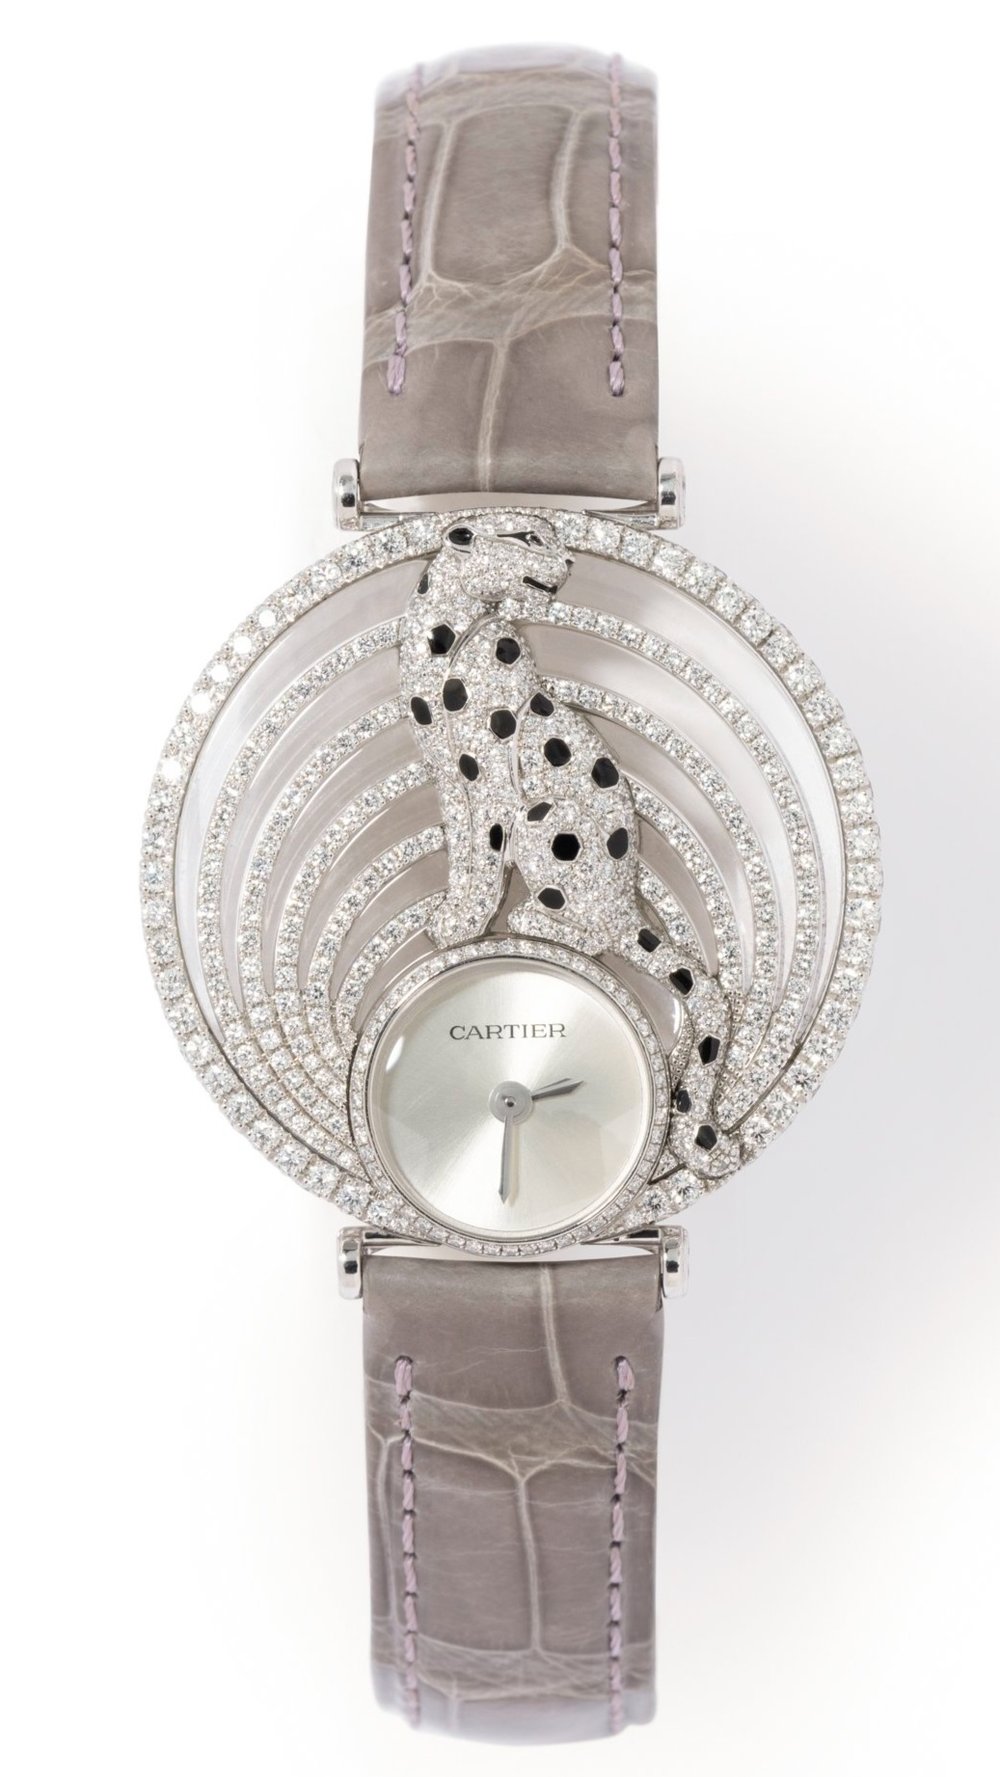 18k White Gold Cartier Watch